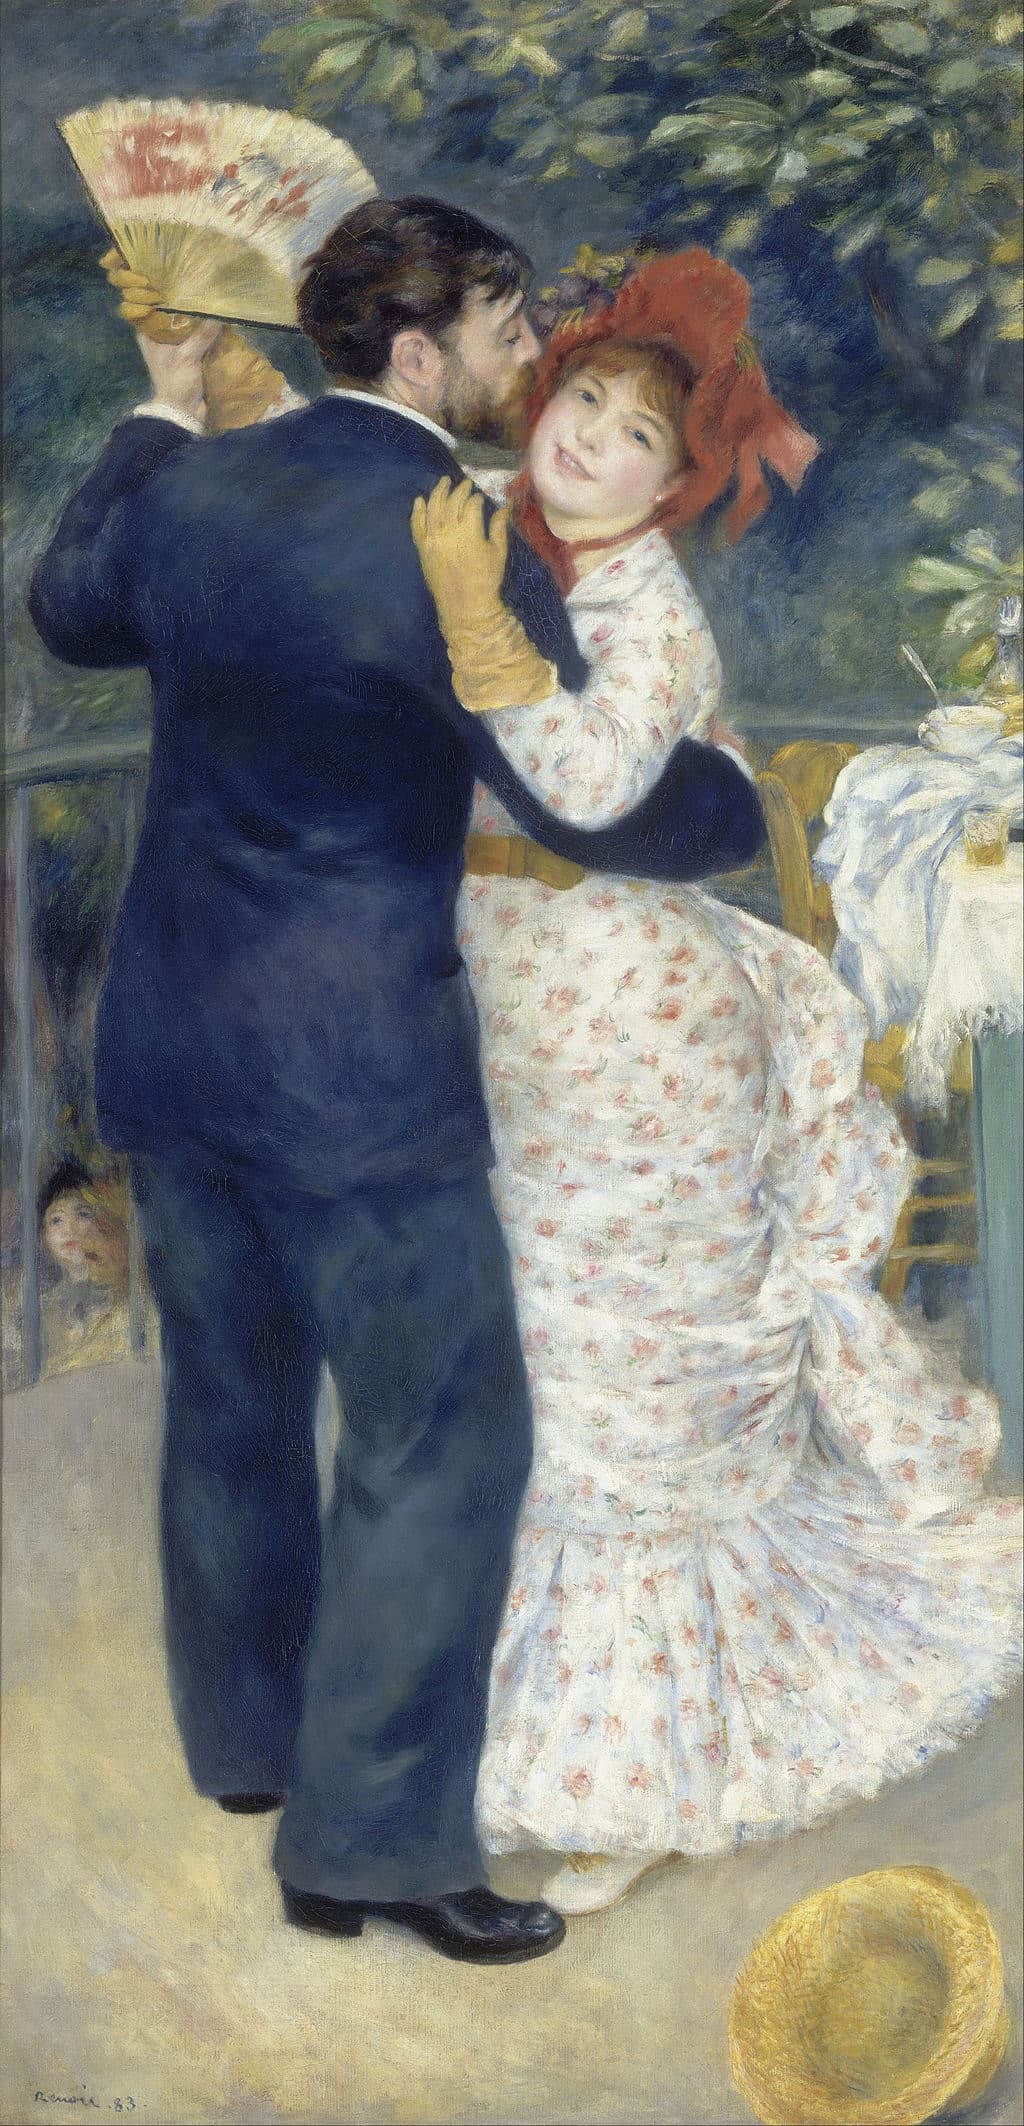 Renoir: Dance in the Country, 1883 (Paris: Musée d'Orsay)